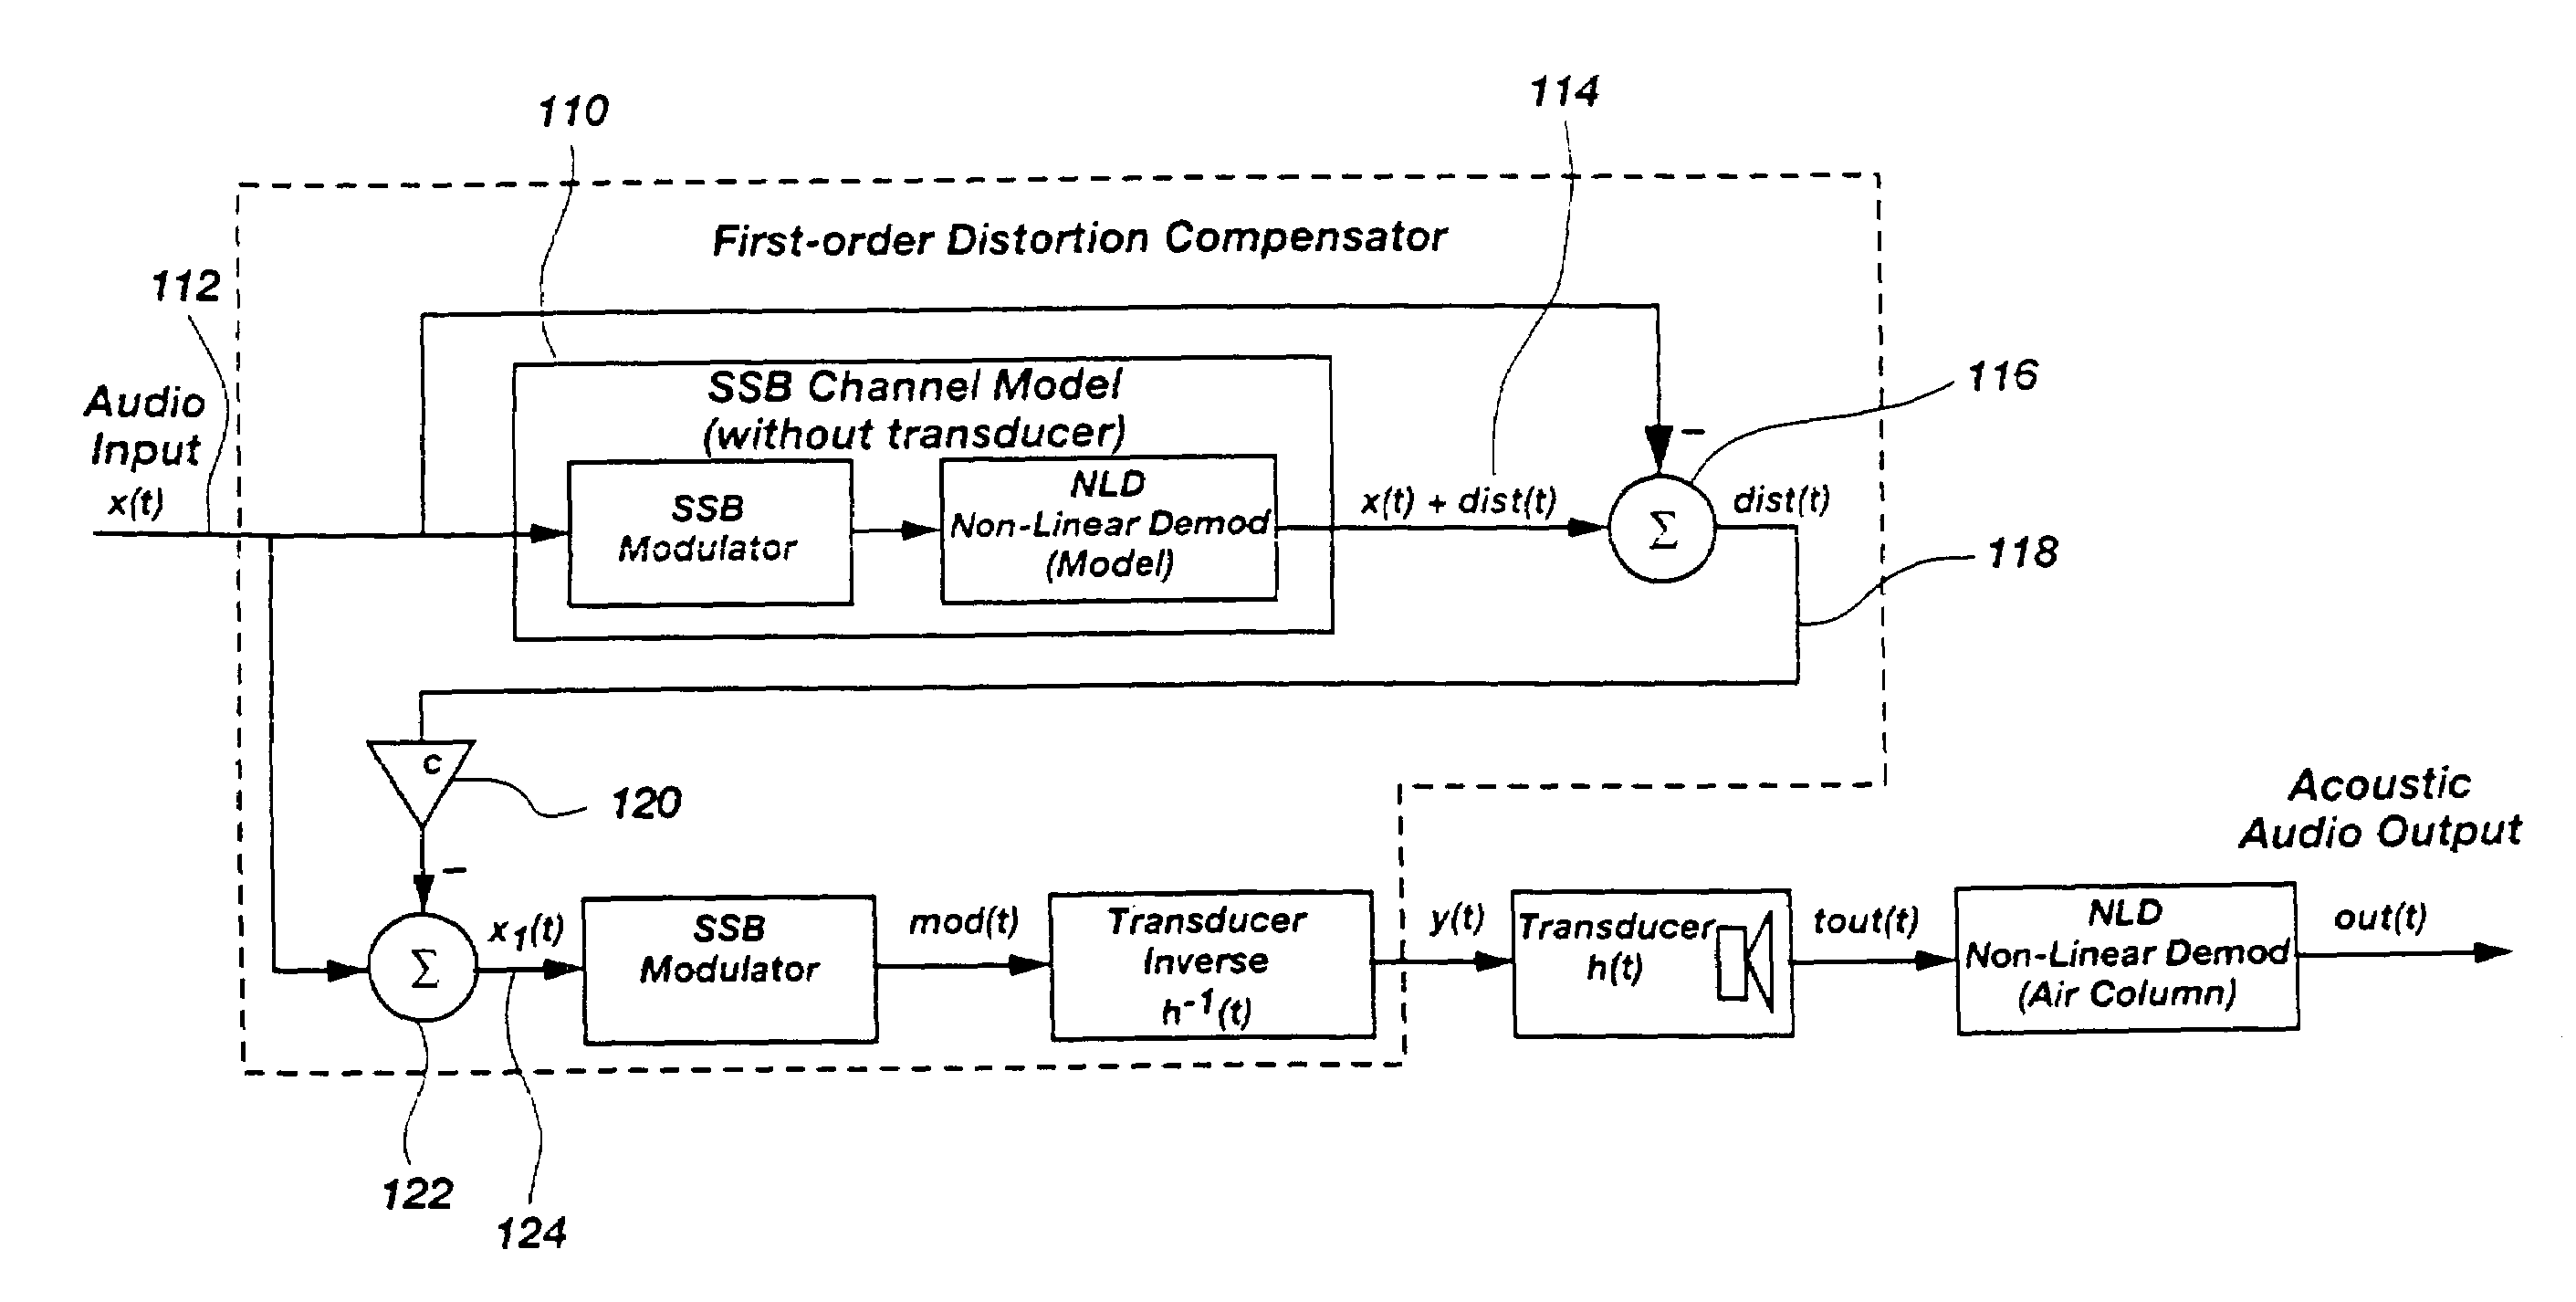 Modulator processing for a parametric speaker system